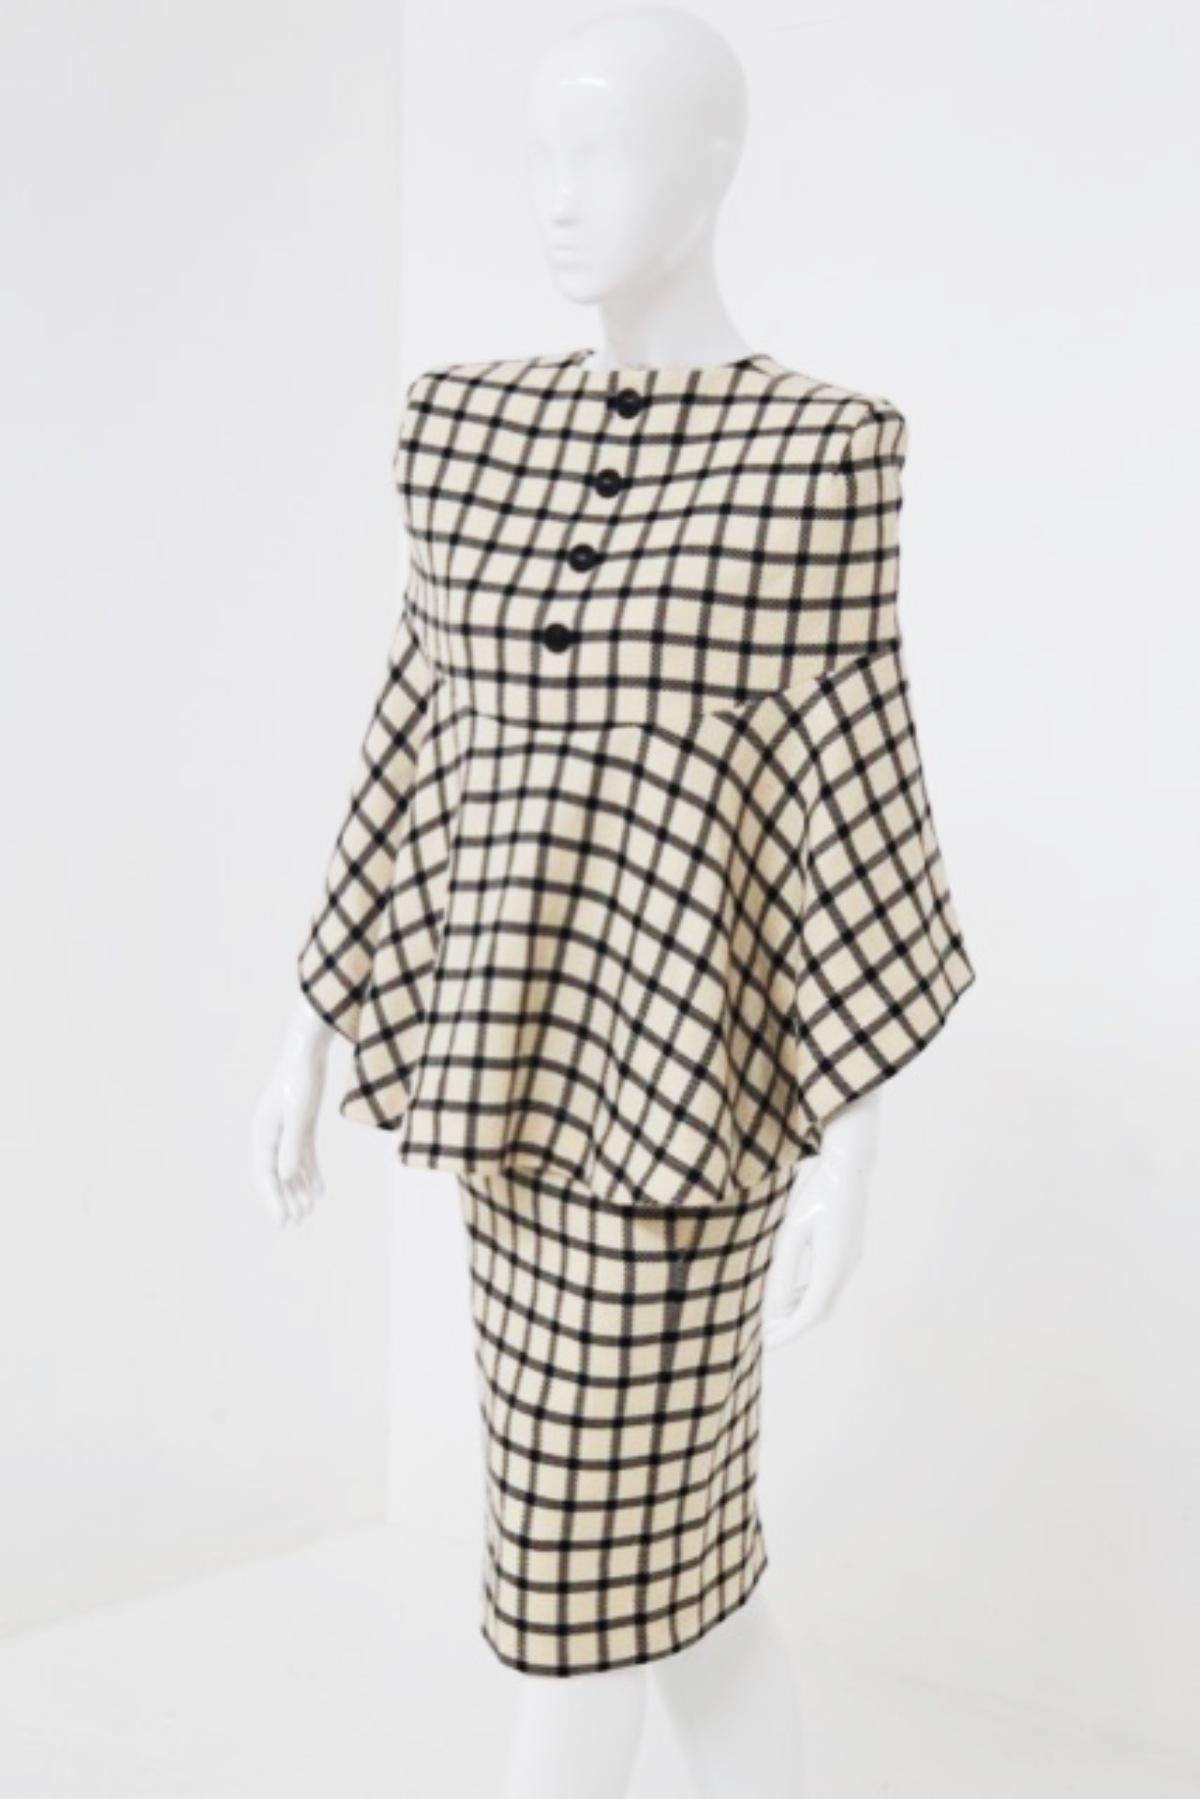 Pierre Cardin Vintage Check Wool Suit For Sale 10